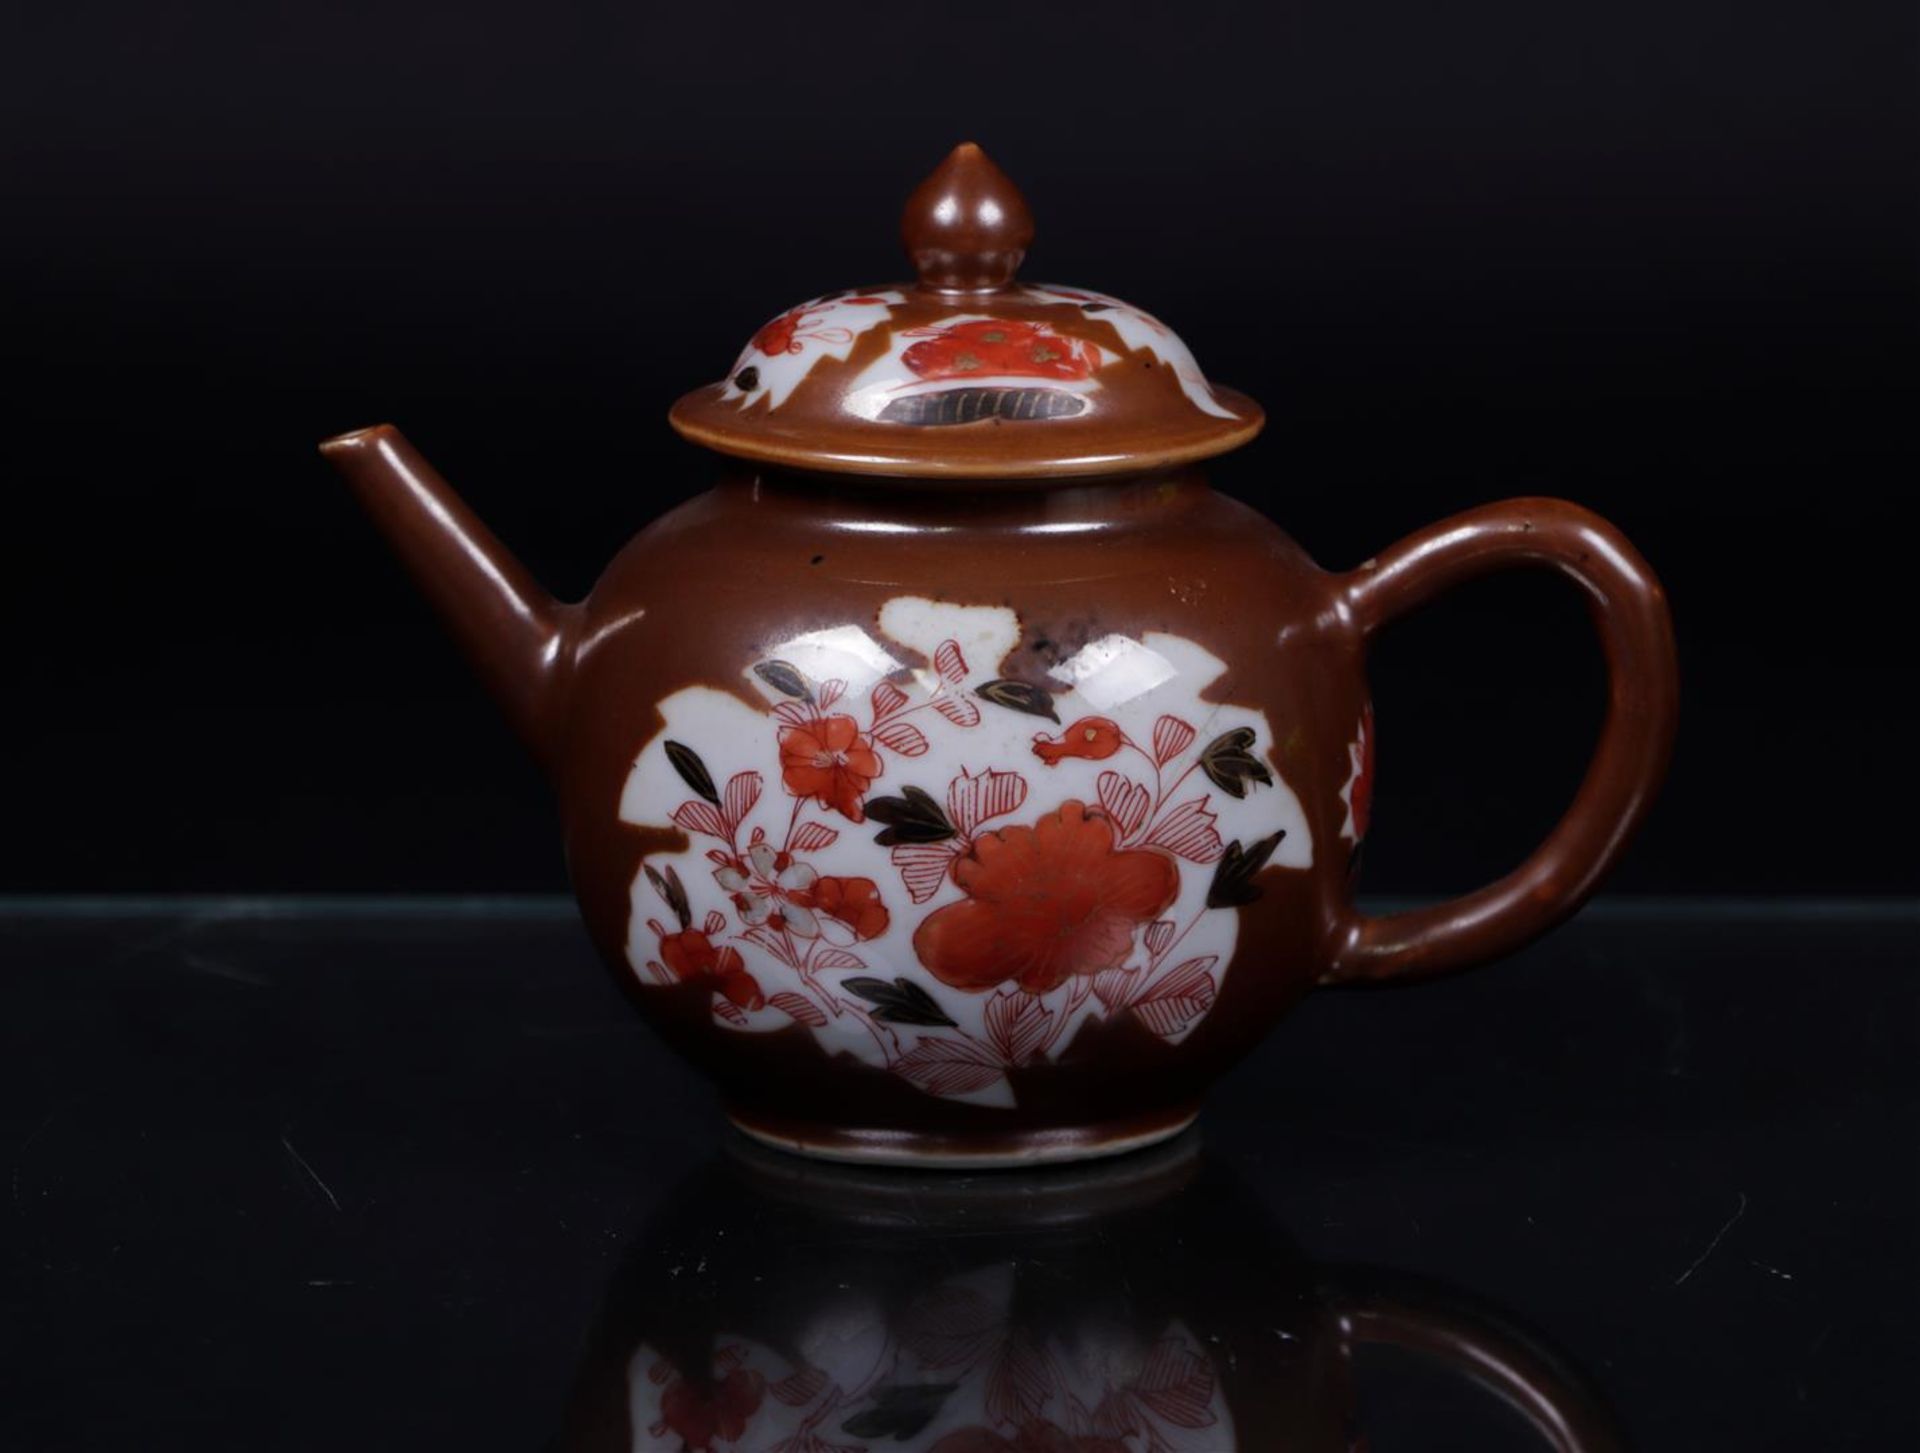 A porcelain teapot, Capuchin/Famille Rose leaf/bed decor. China, 18th century.
17 x 14 cm.